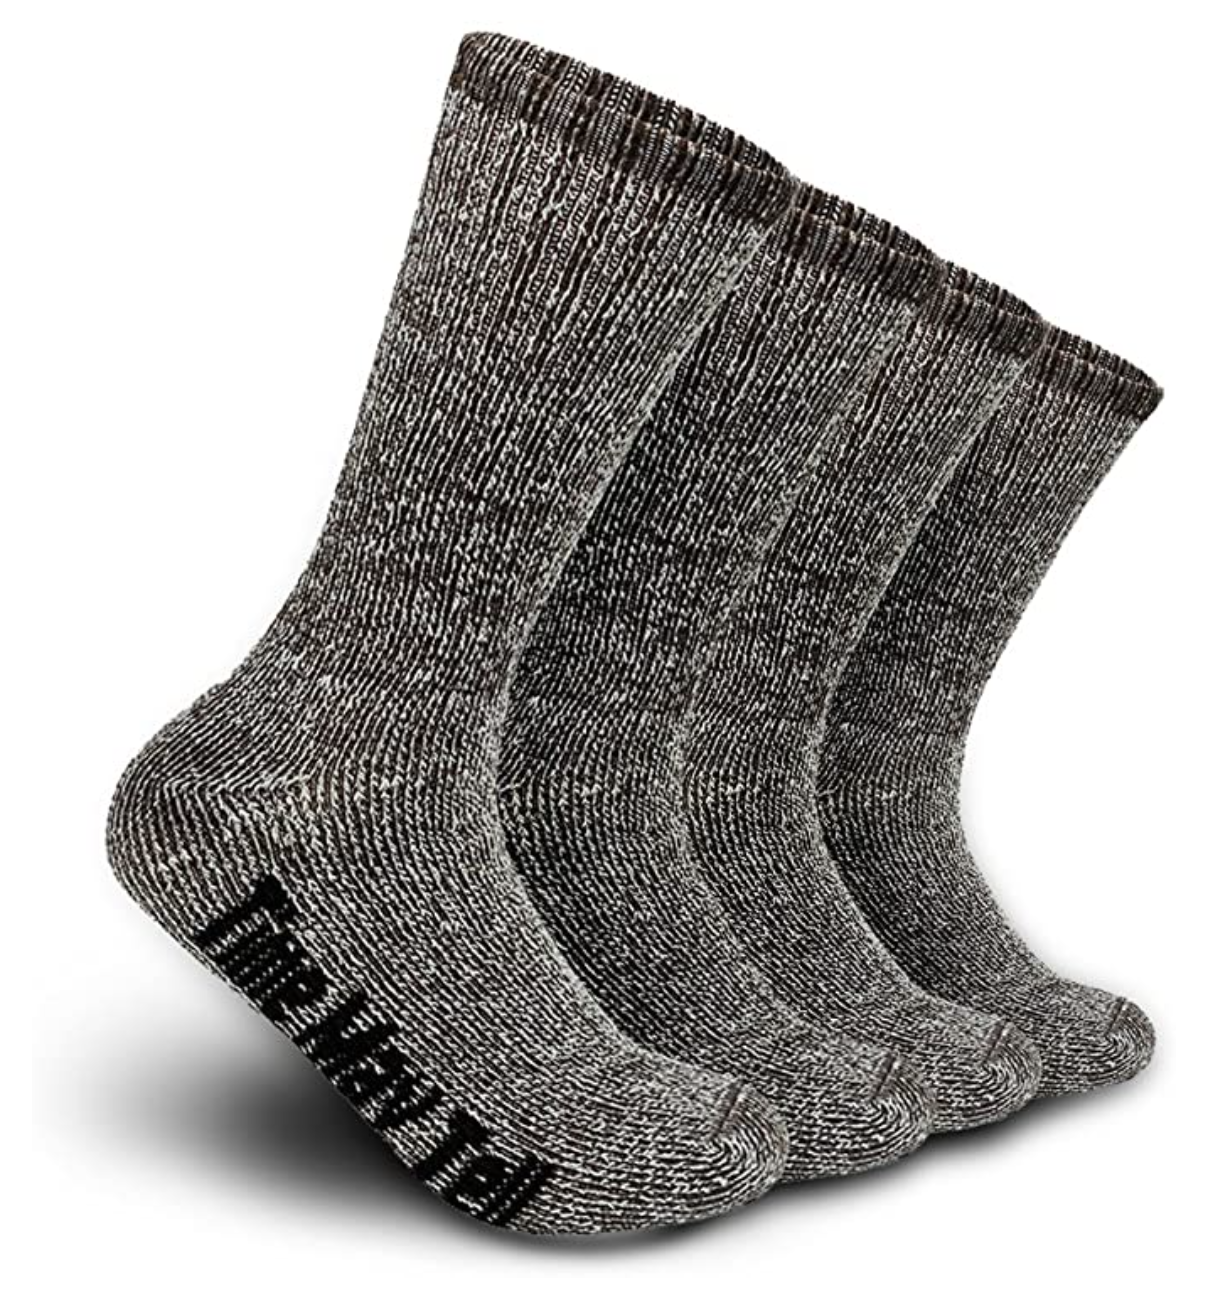 Lake Taupo Schadelijk onkruid Time May Tell Professional Merino Wool Hiking Socks, 4-Pack